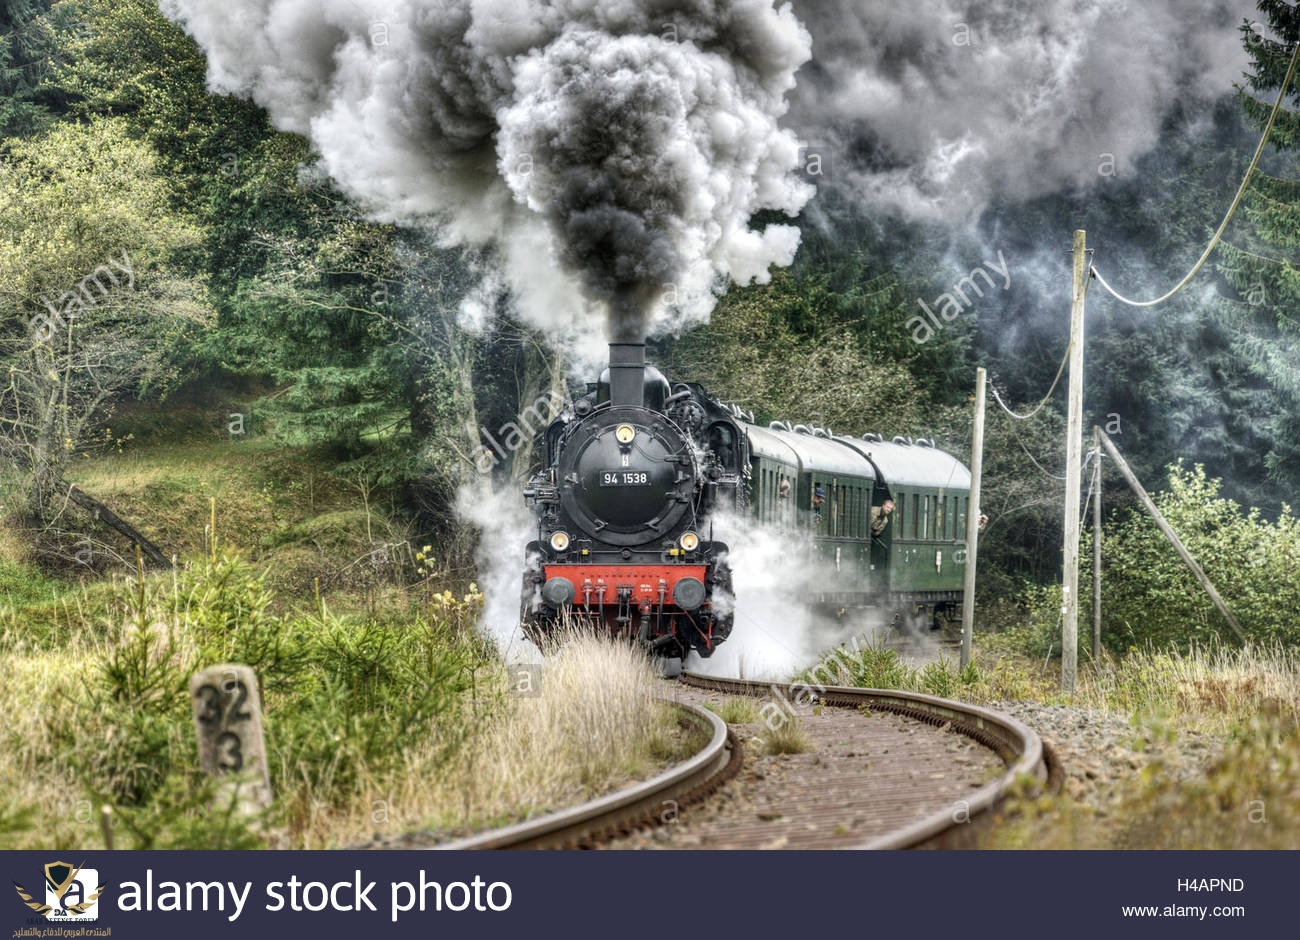 train-driving-in-an-s-bend-steam-engine-smoking-heavily-H4APND.jpg